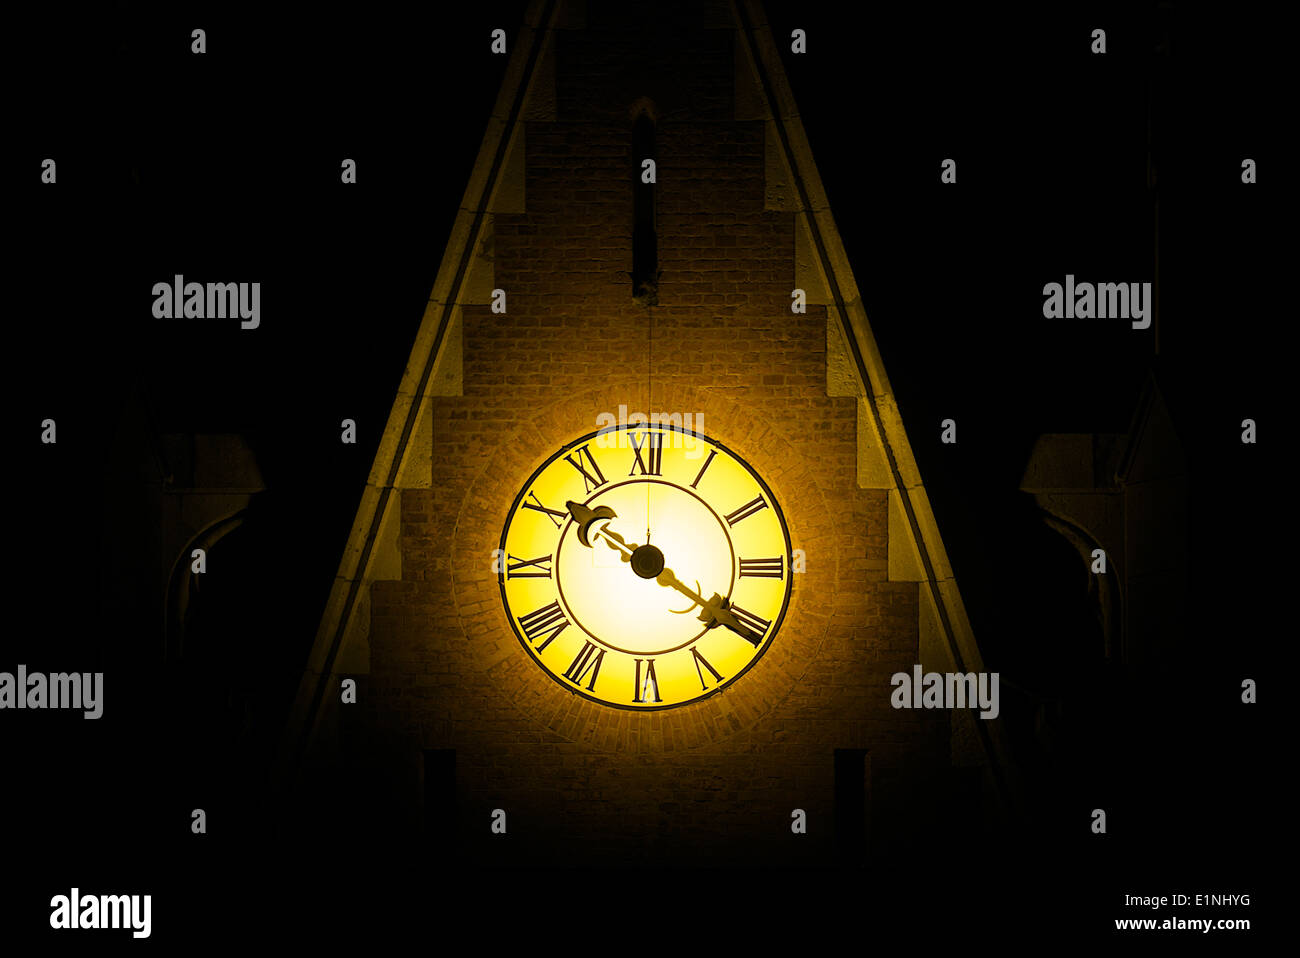 Nachtuhr Turm Kirchturm-Uhr Stockfotografie - Alamy